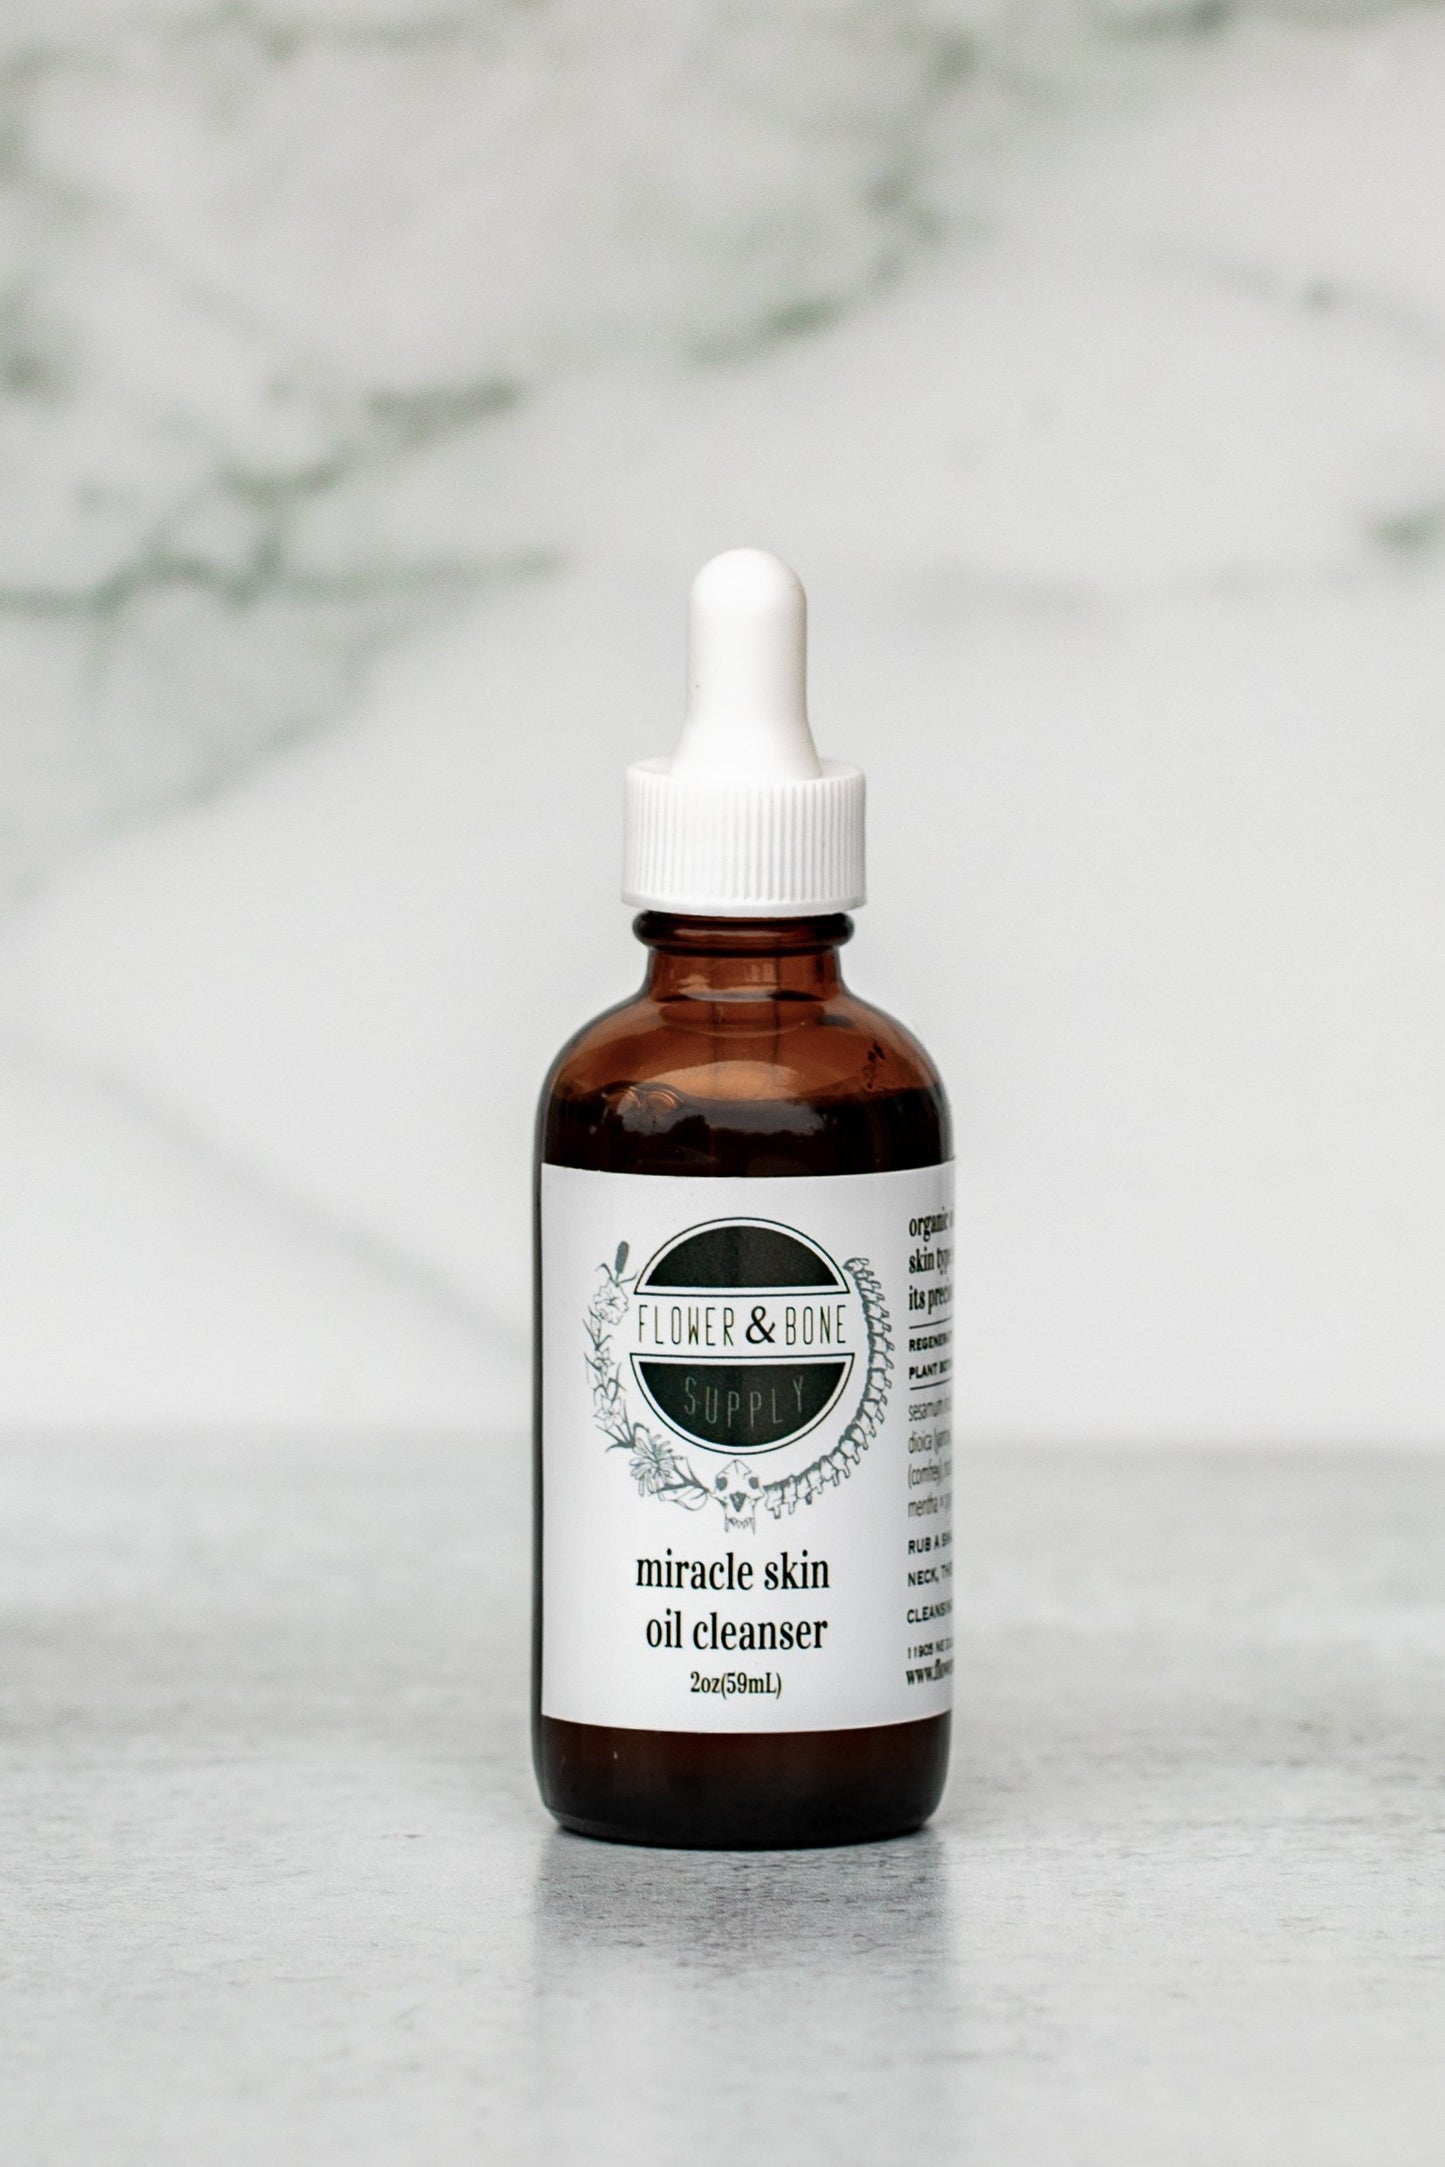 FLOWER & BONE SUPPLY | Miracle Skin Oil Cleanser